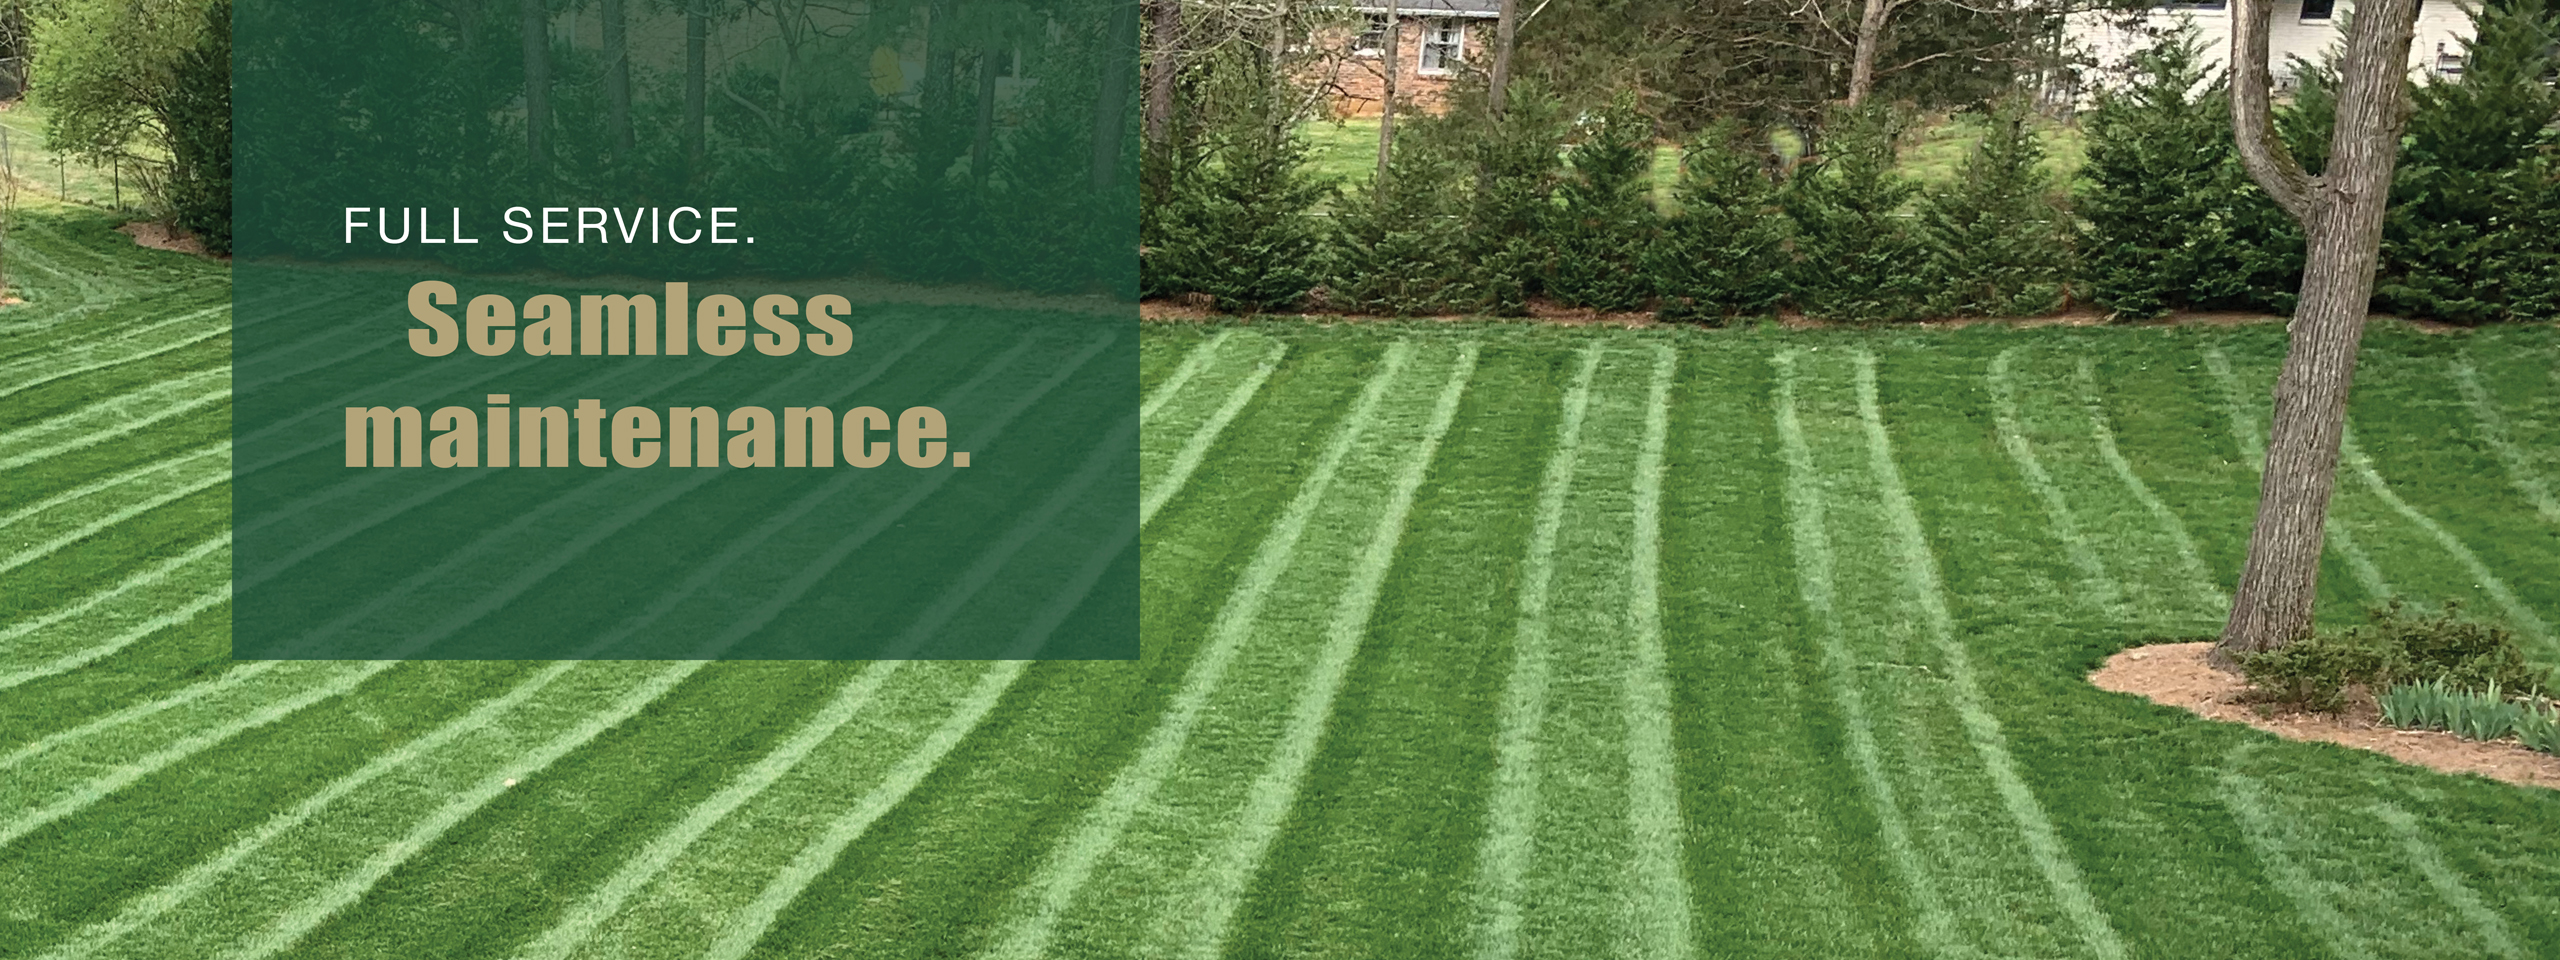 US Lawn and Landscape Turf Management Services